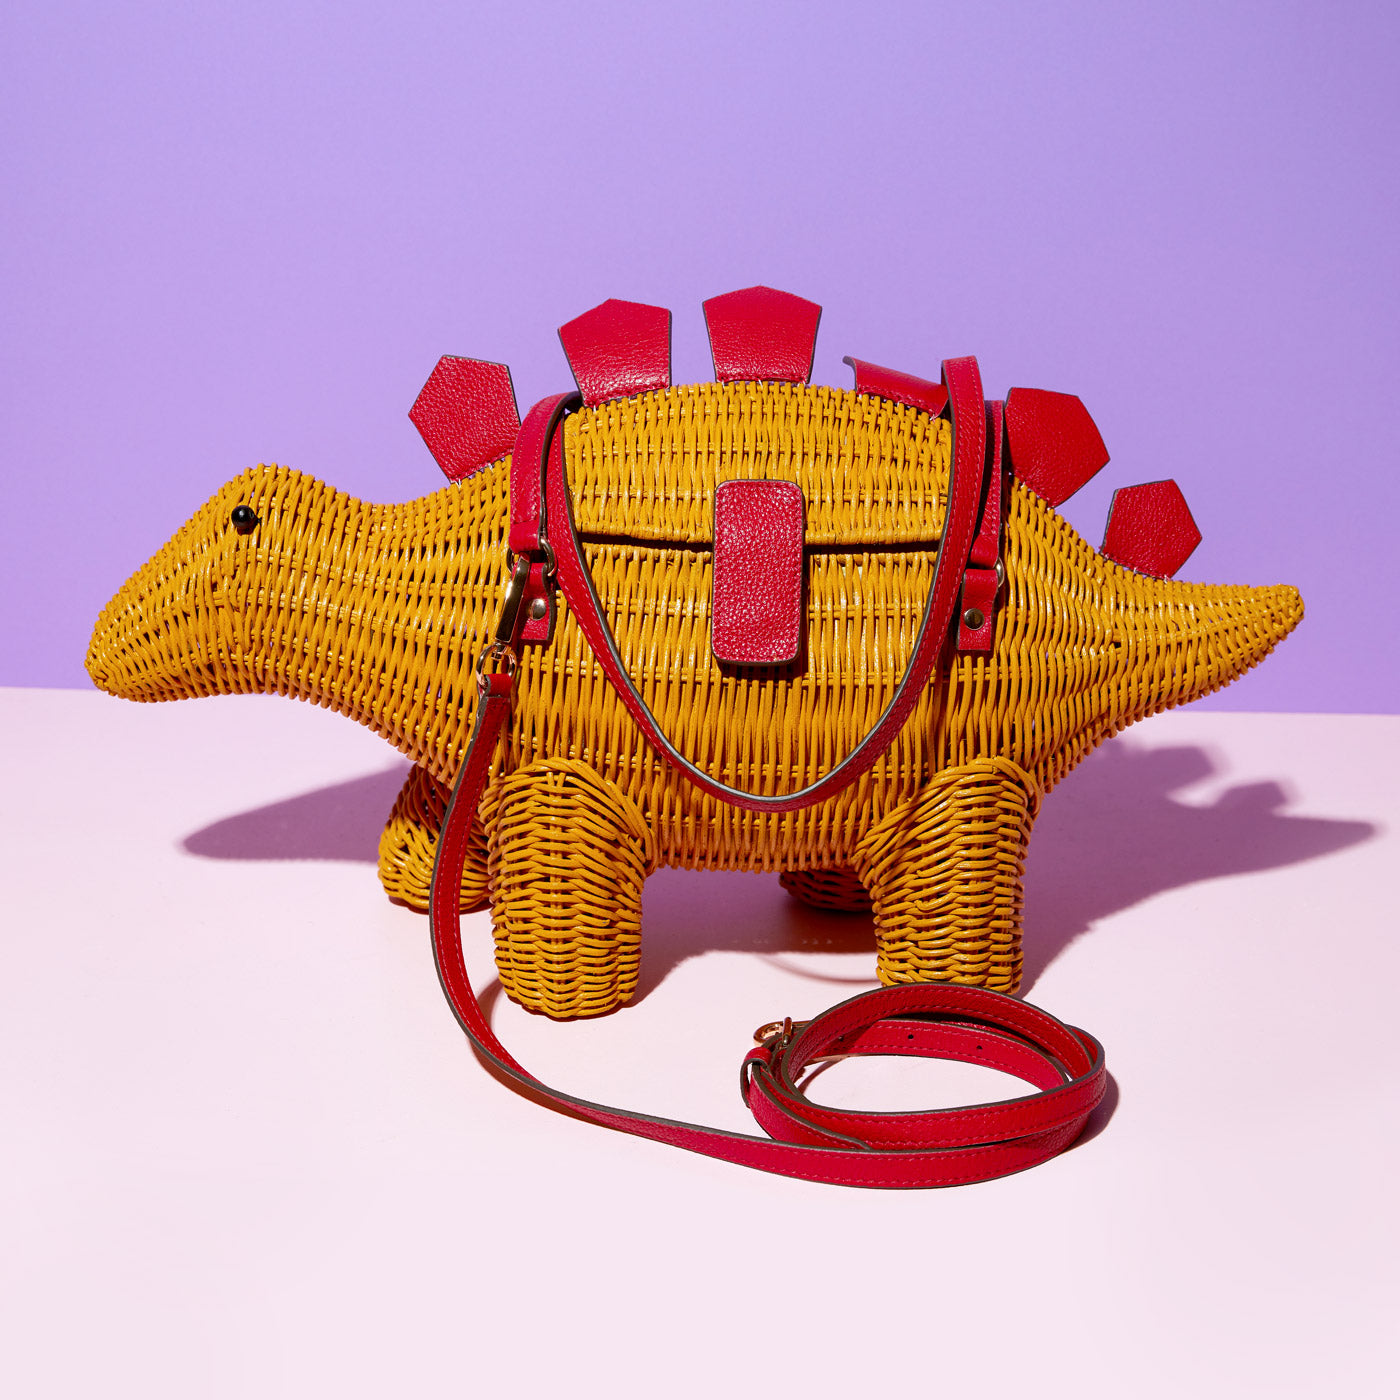 Wicker Darling steagasaurus bag dinosaur wicker purse 05